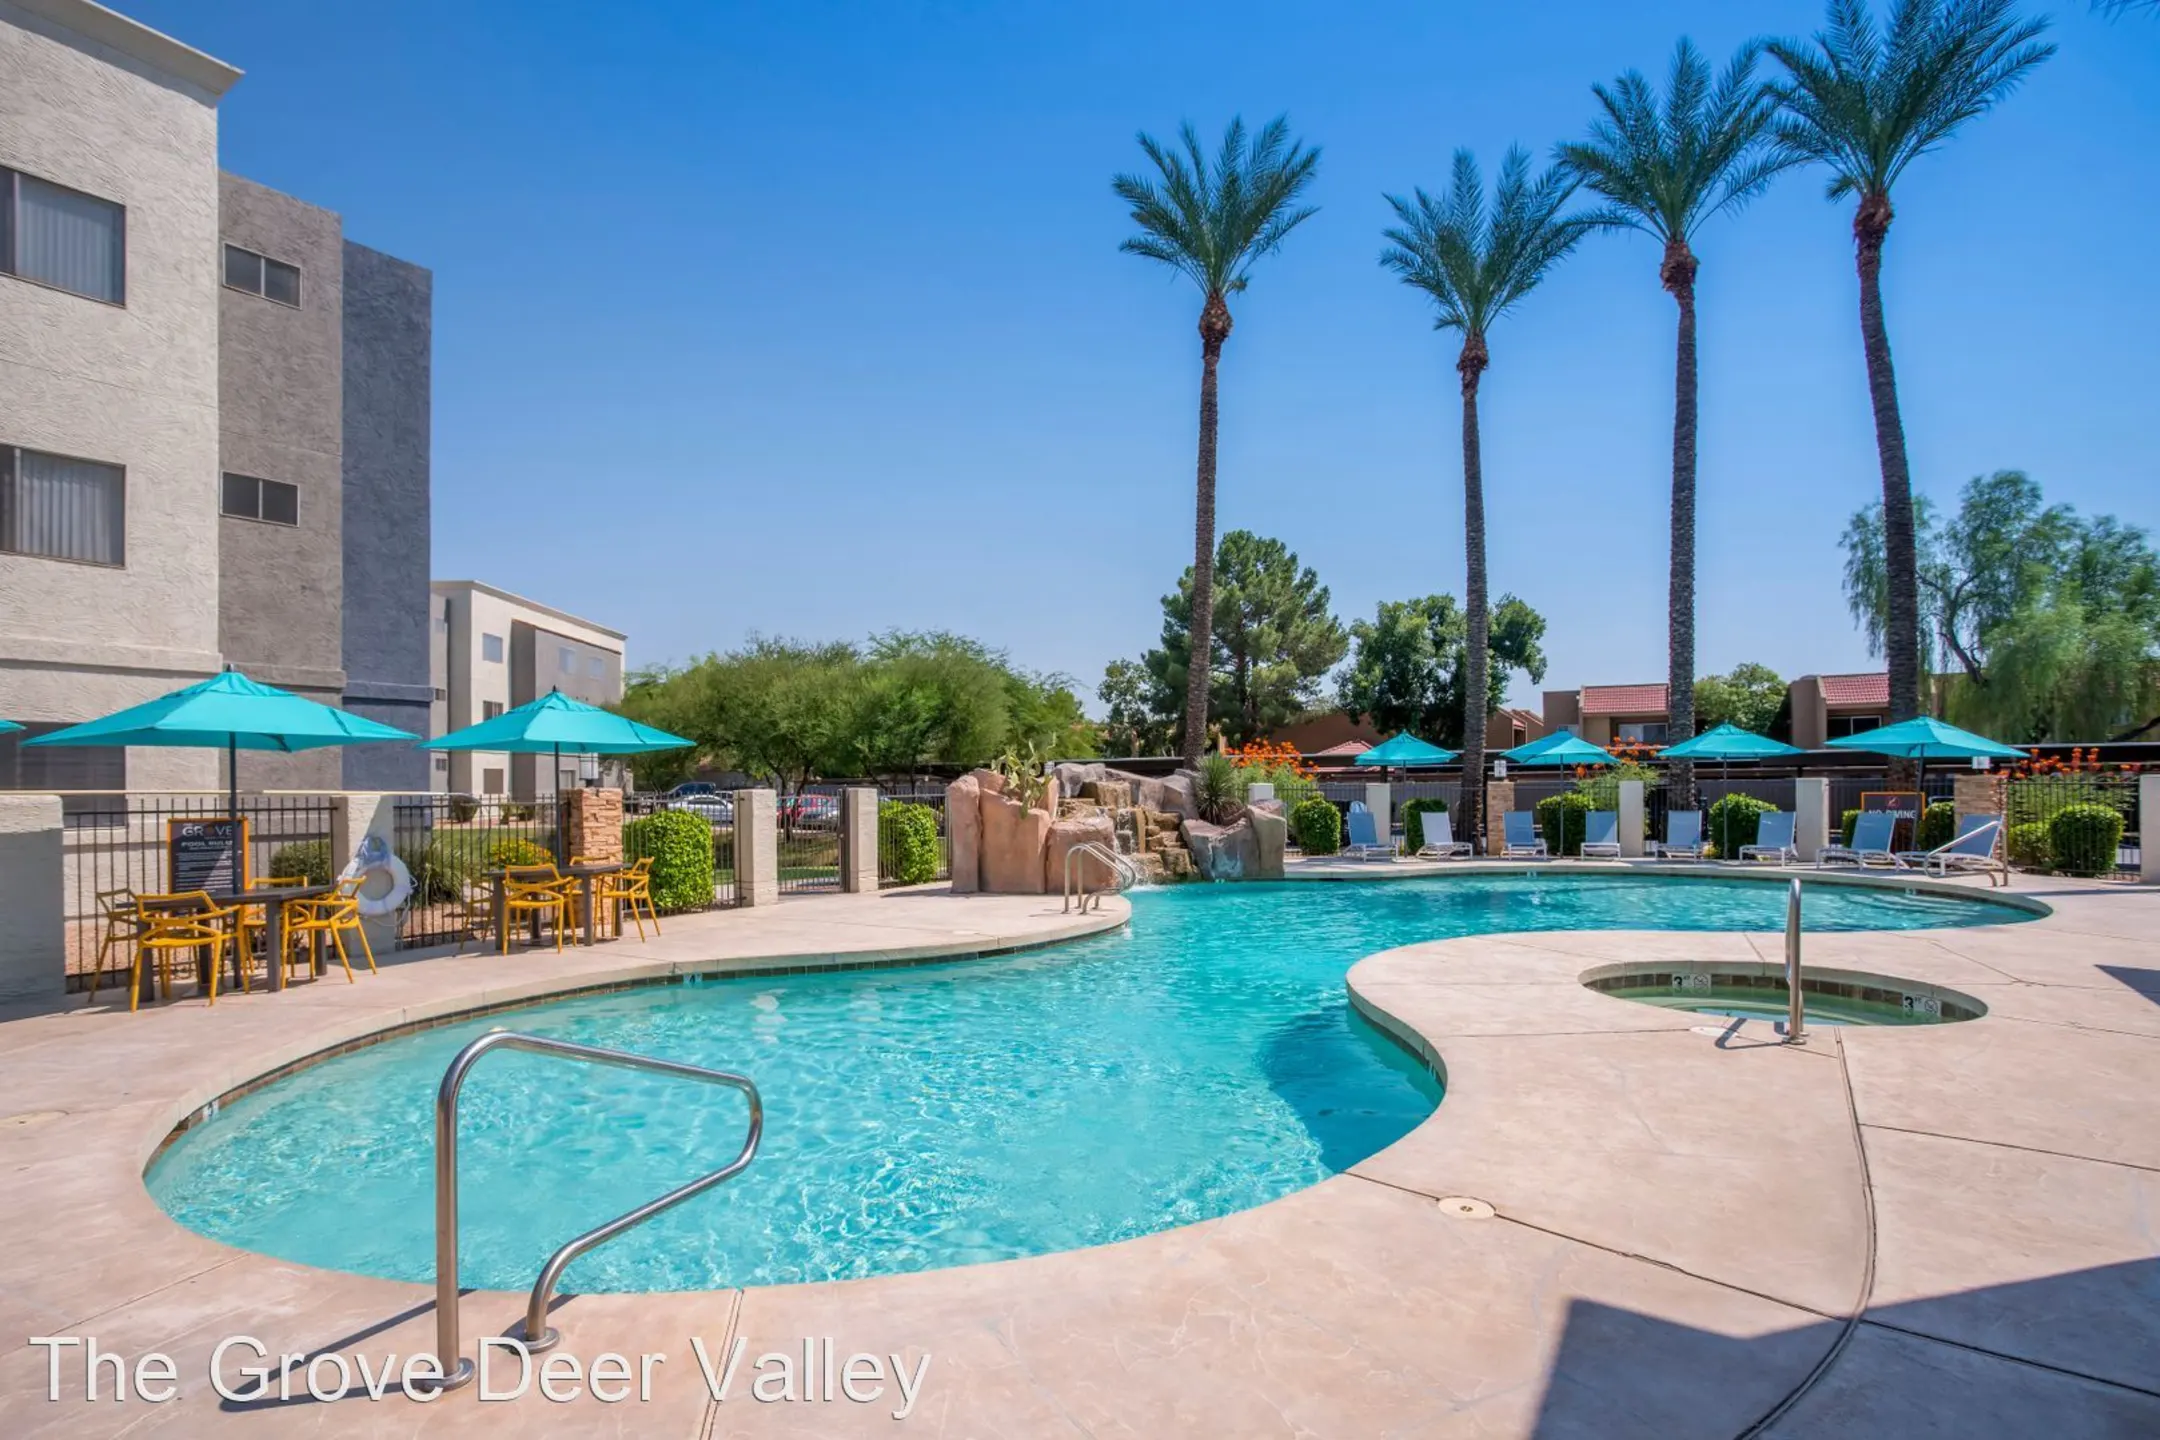 Pool - The Grove Deer Valley - Phoenix, AZ